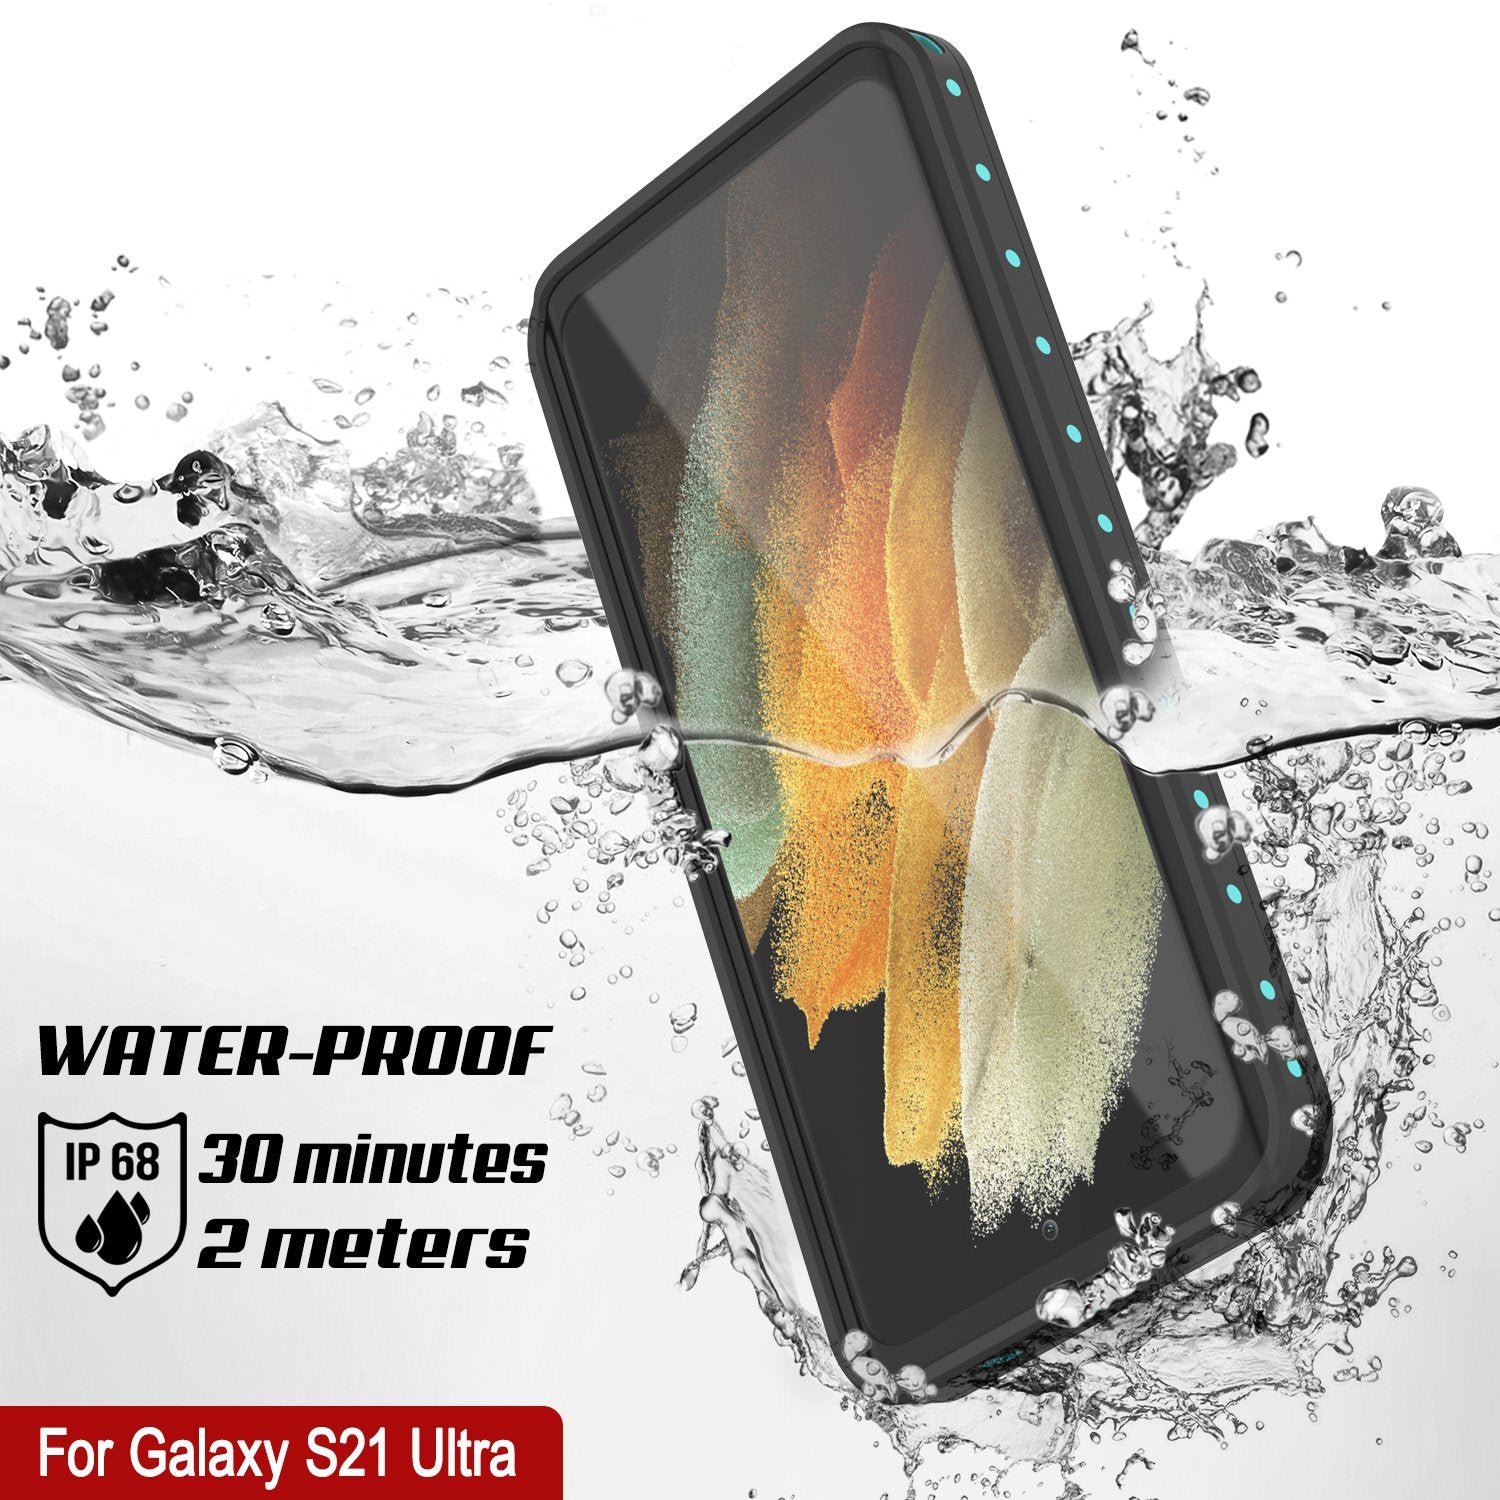 Galaxy S21 Ultra Waterproof Case PunkCase StudStar Teal Thin 6.6ft Underwater IP68 Shock/Snow Proof